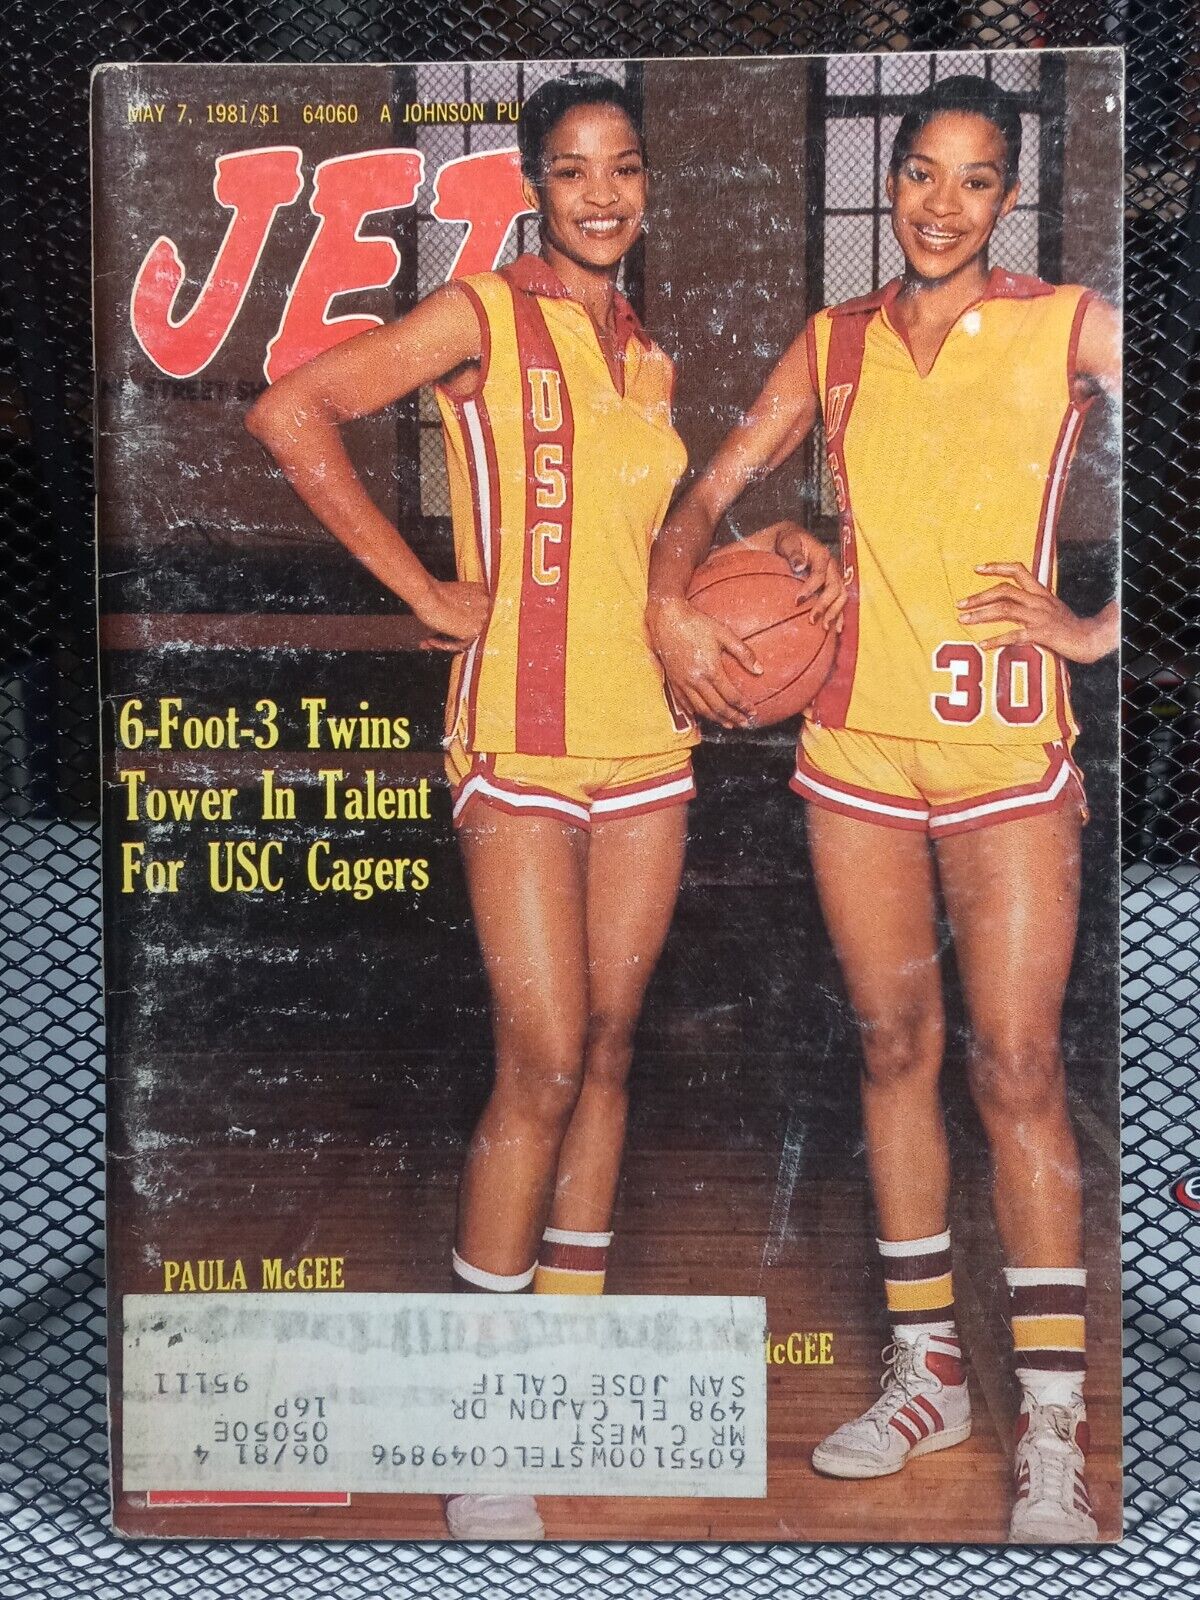 USC McGee Twins Basketball Women Racial Black Americana JET Magazine May 7, 1981